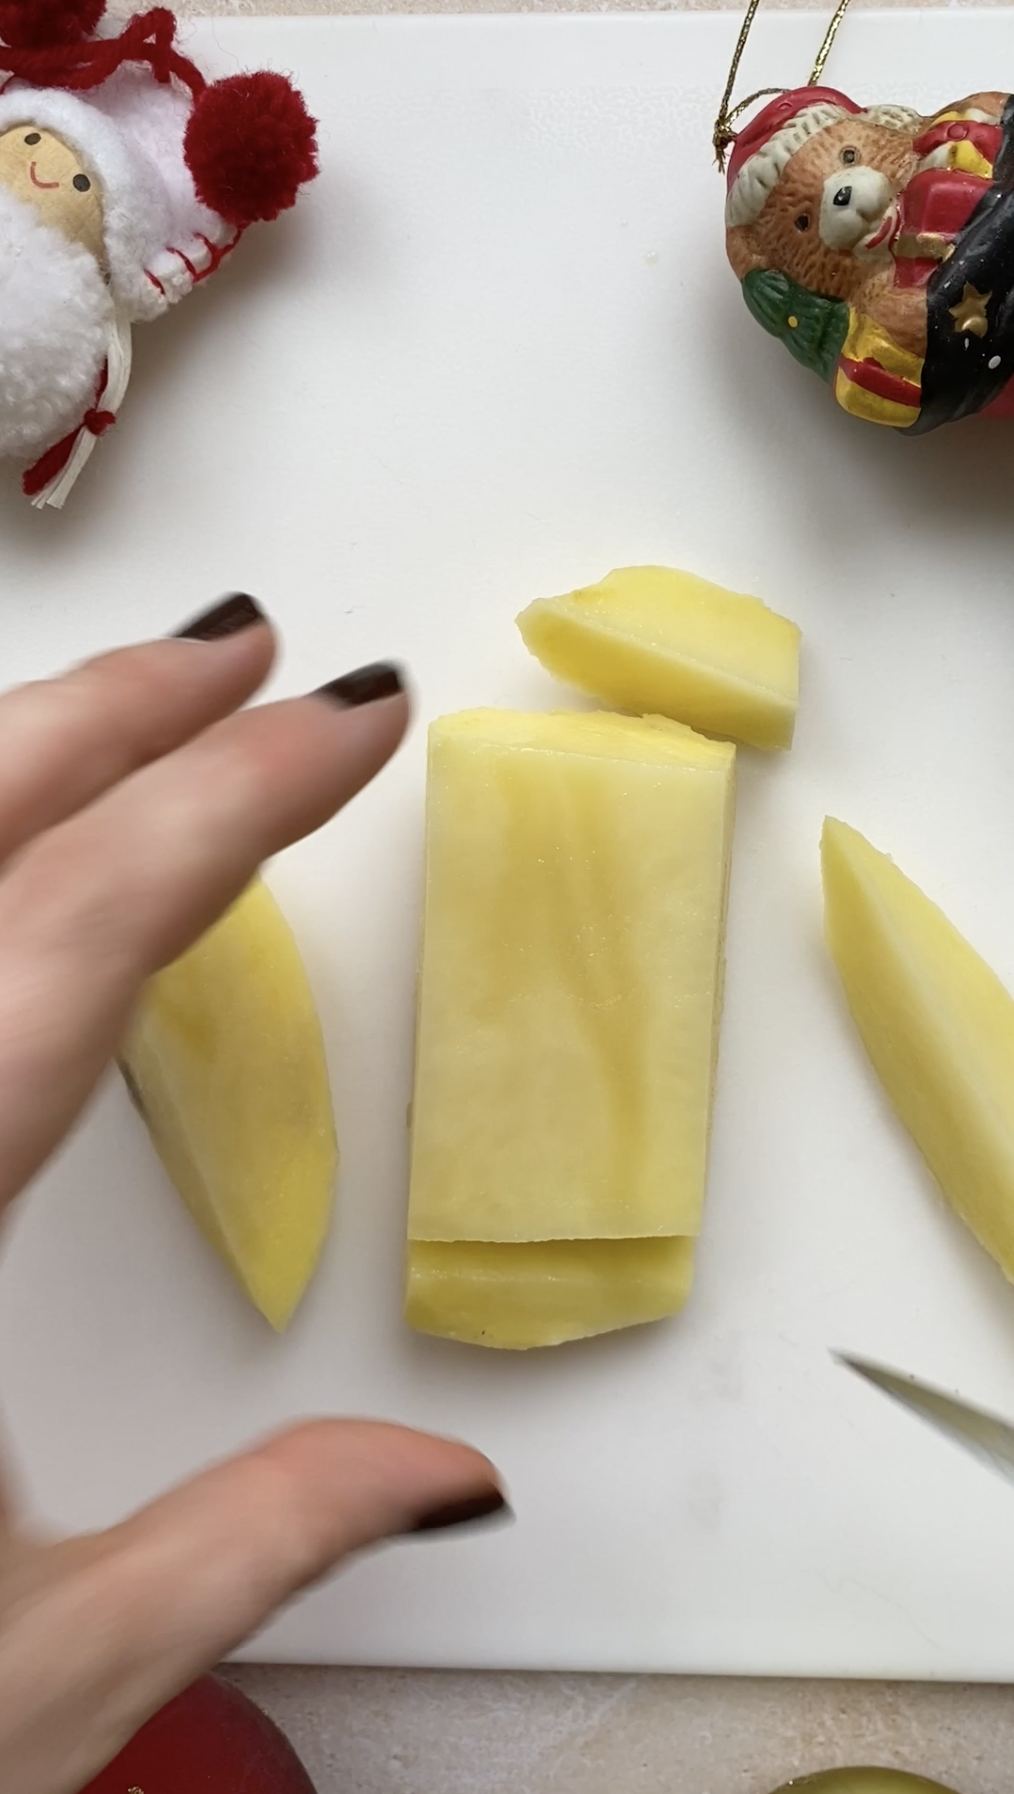 Potato cut in rectangle.